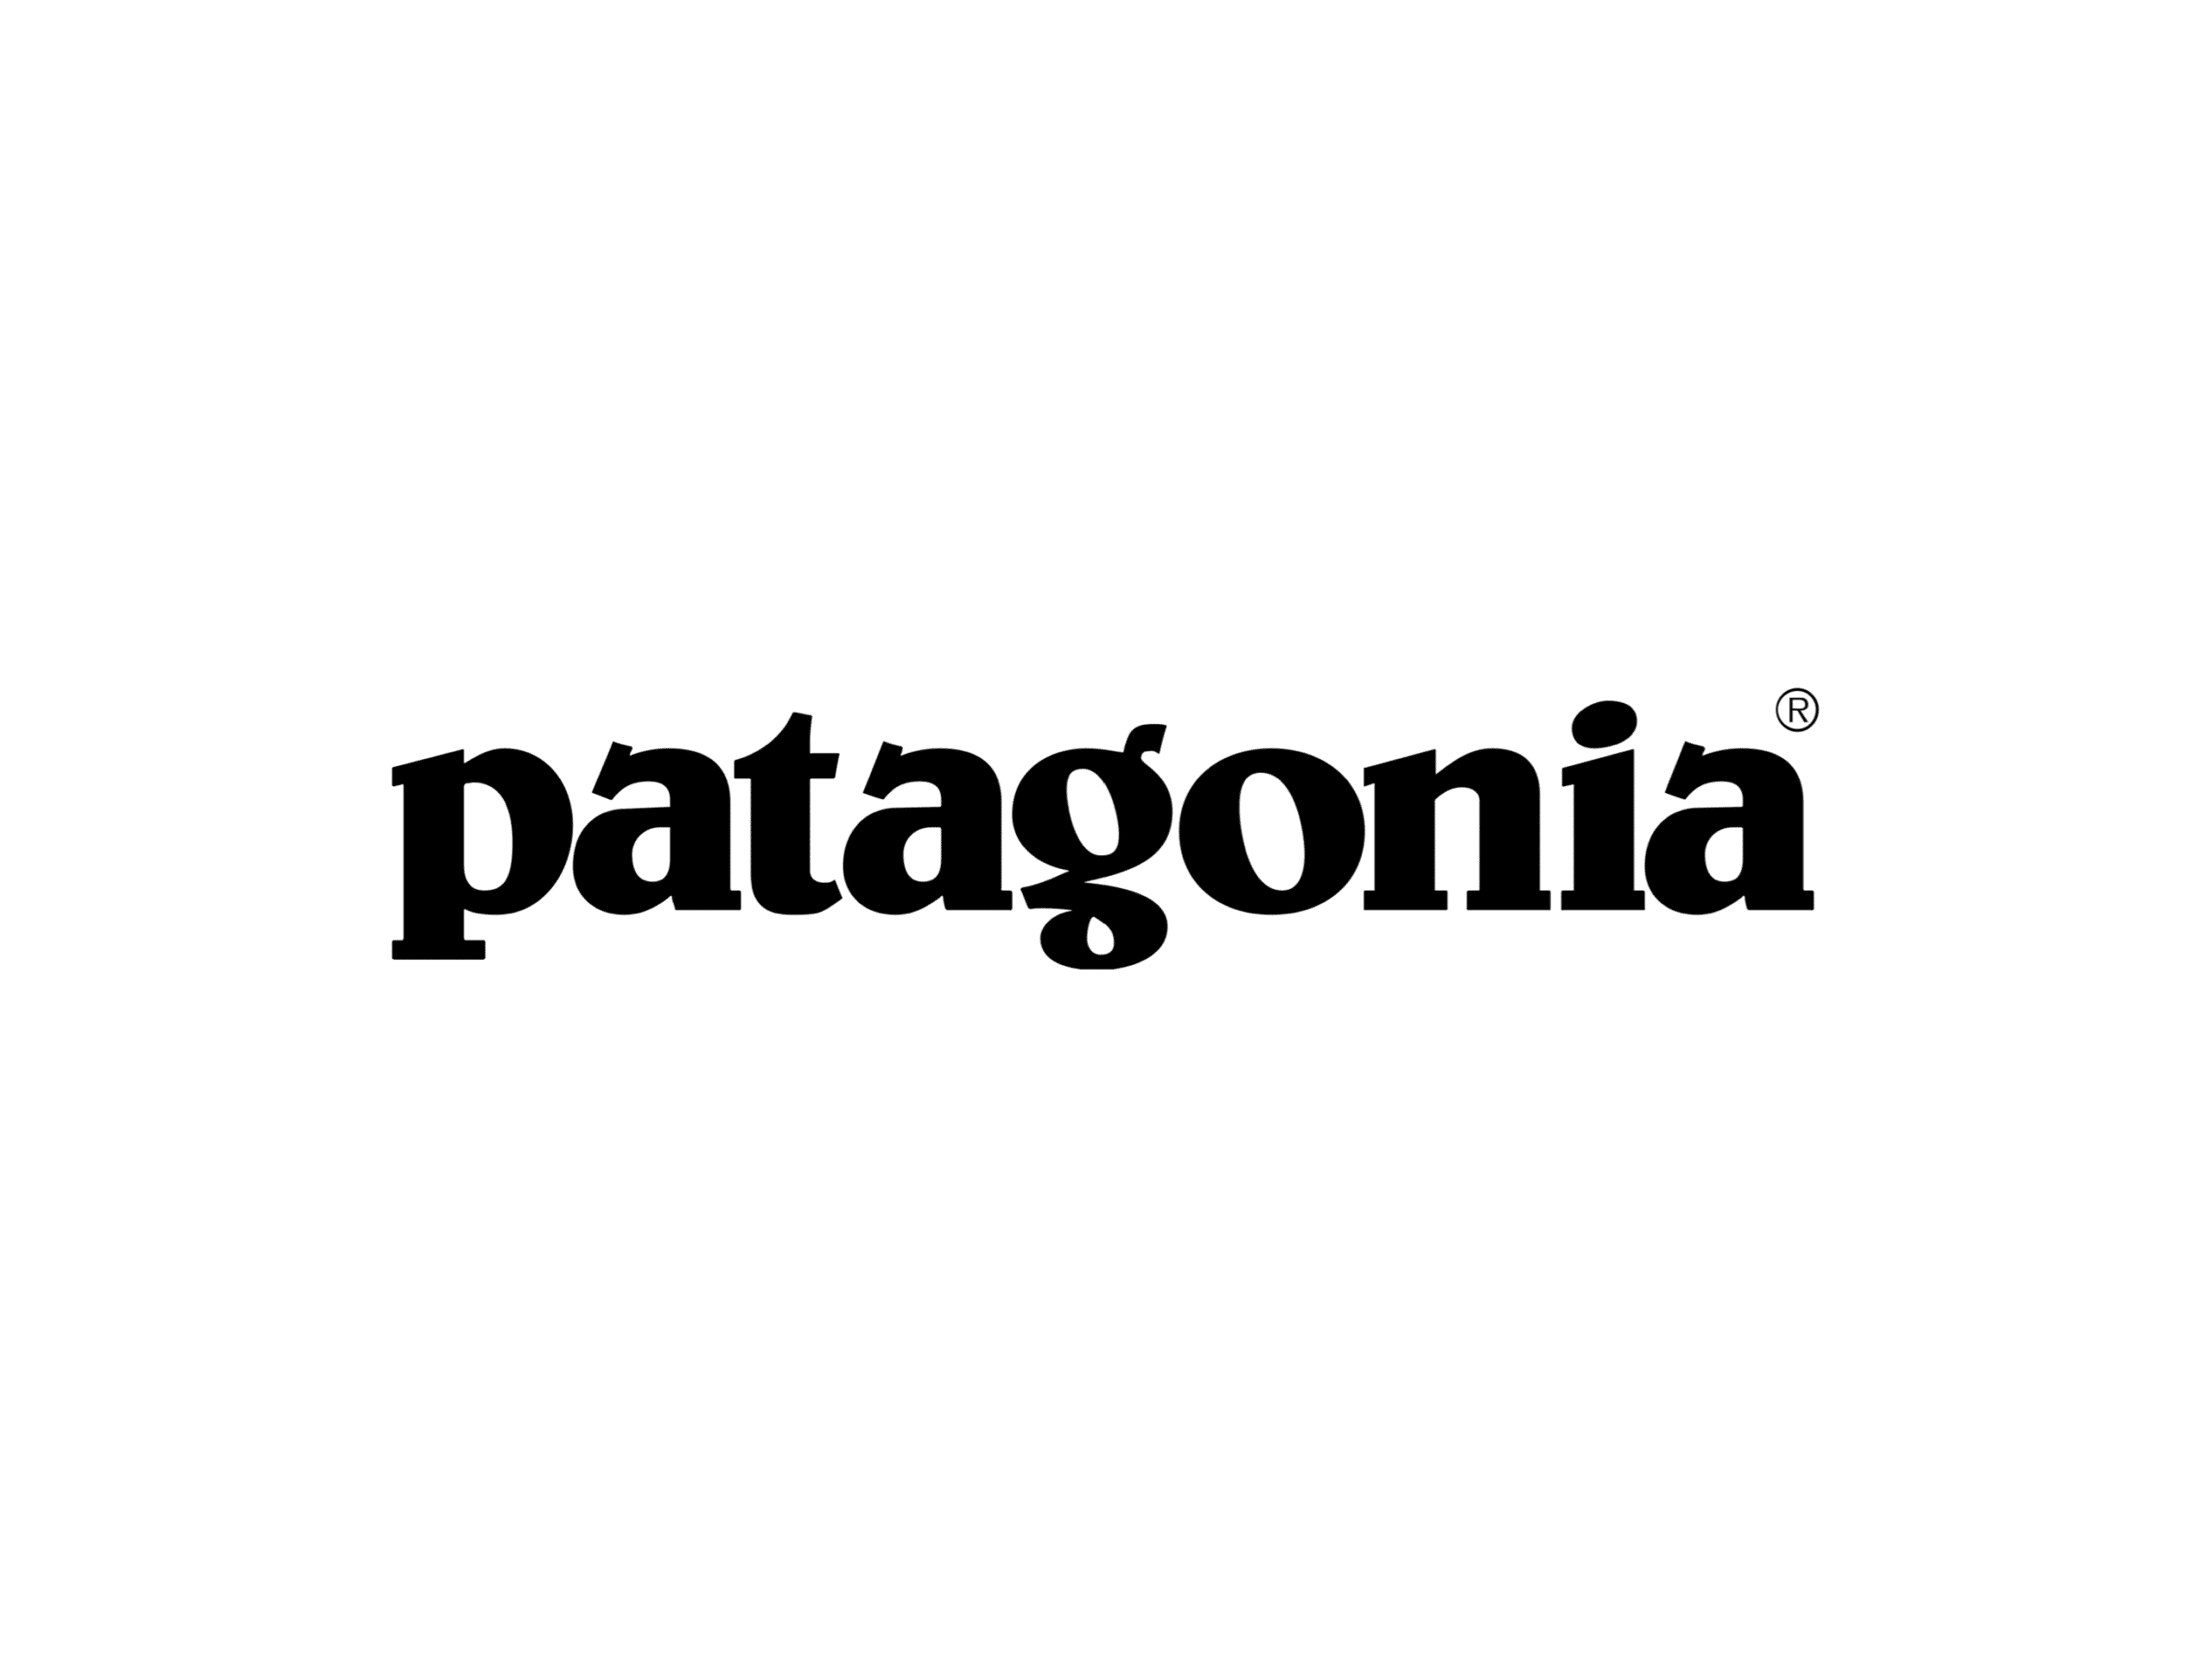 Blog - Brand Focus: Patagonia